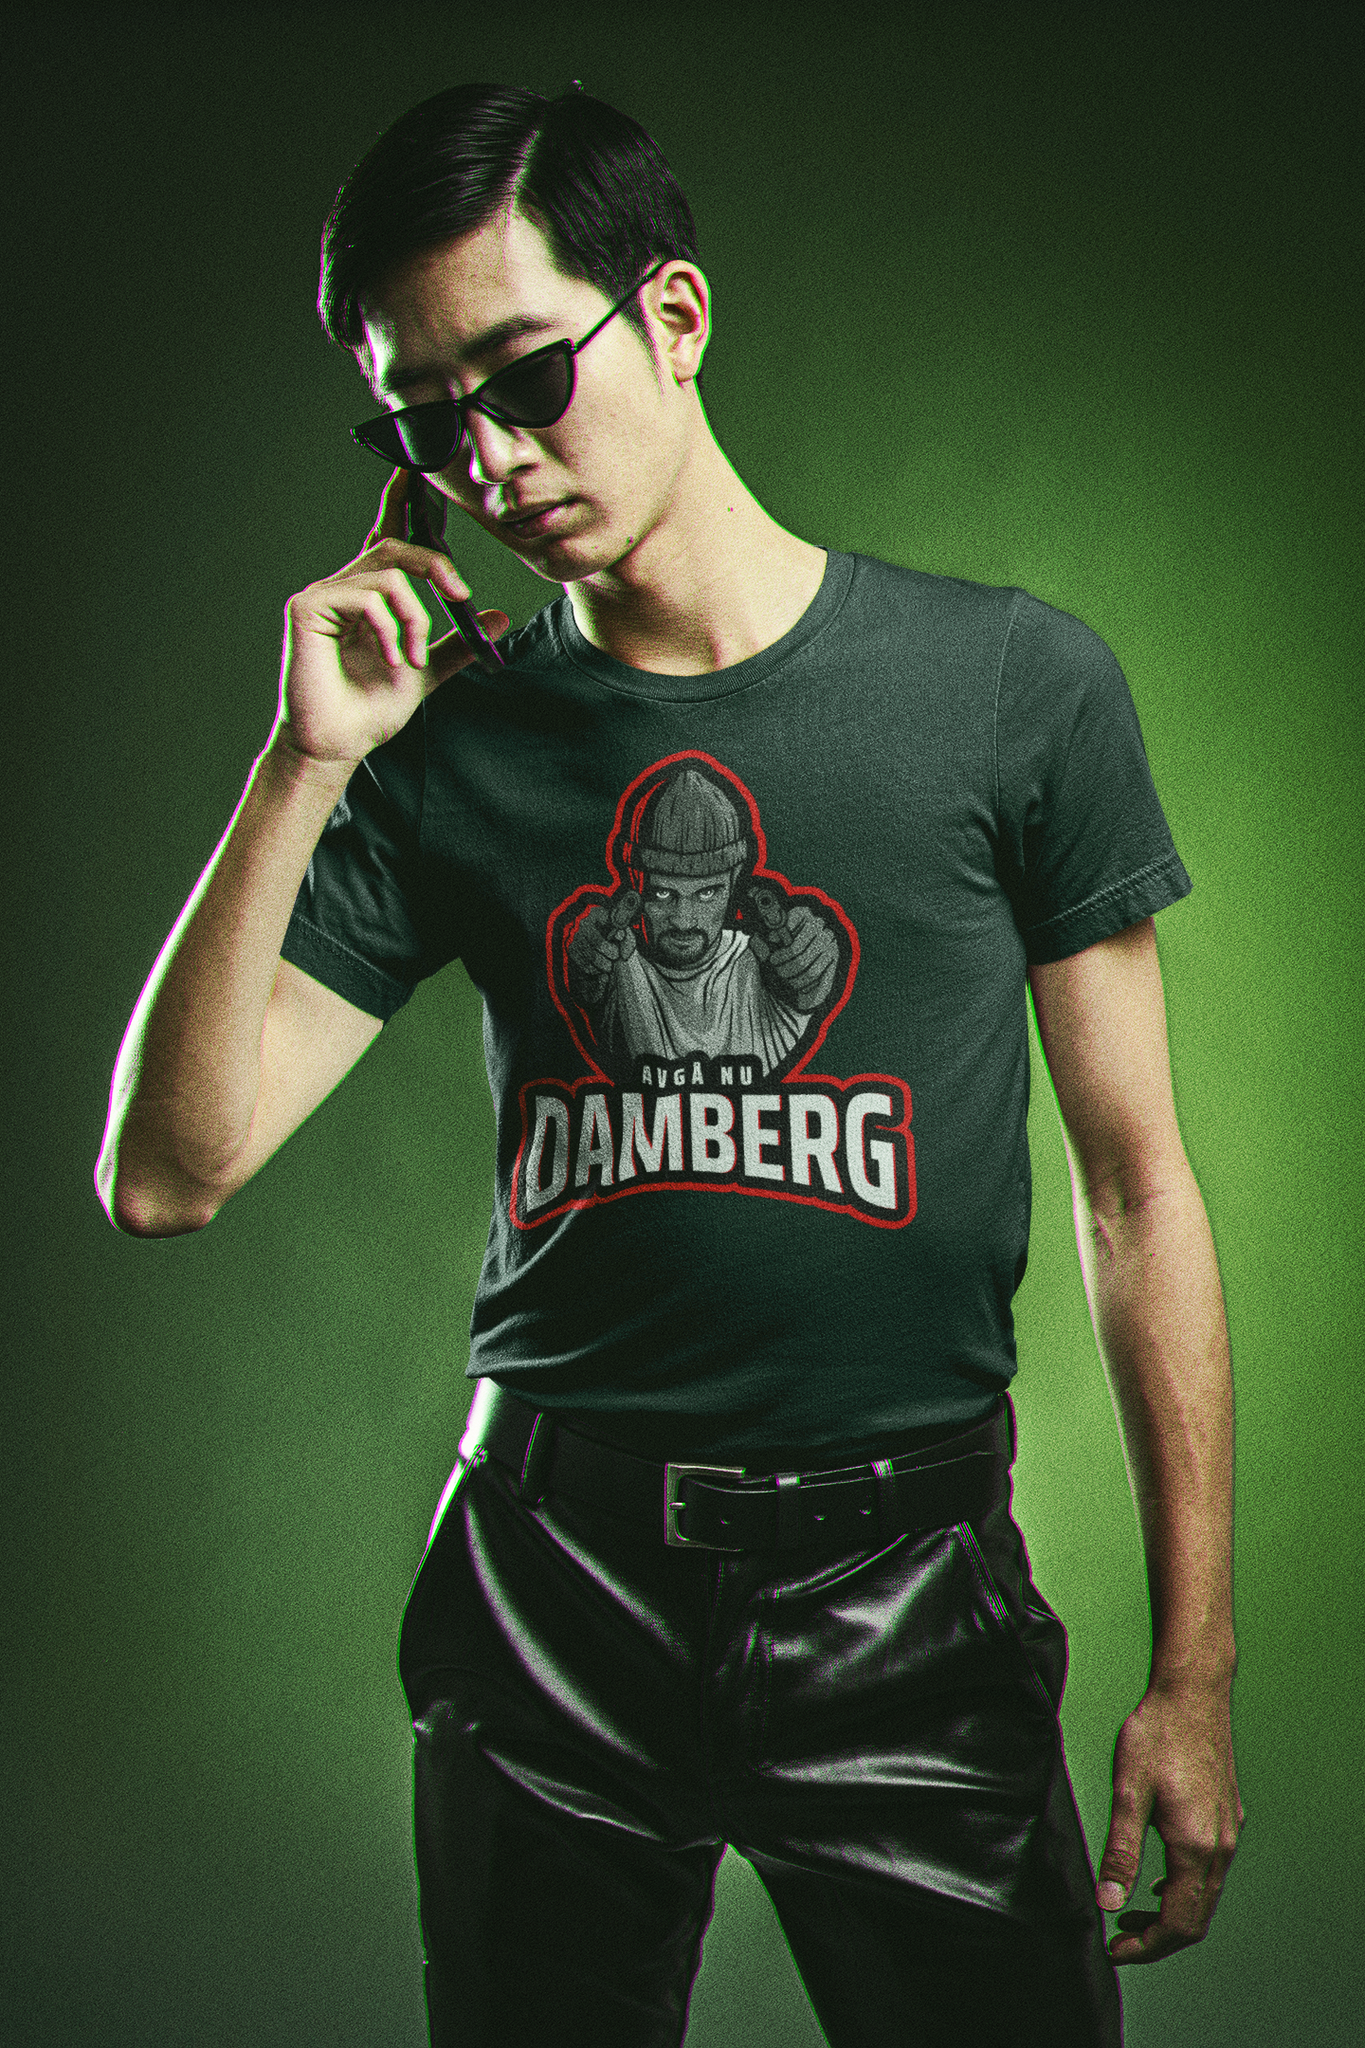 Avgå Nu Damberg T-Shirt Herr